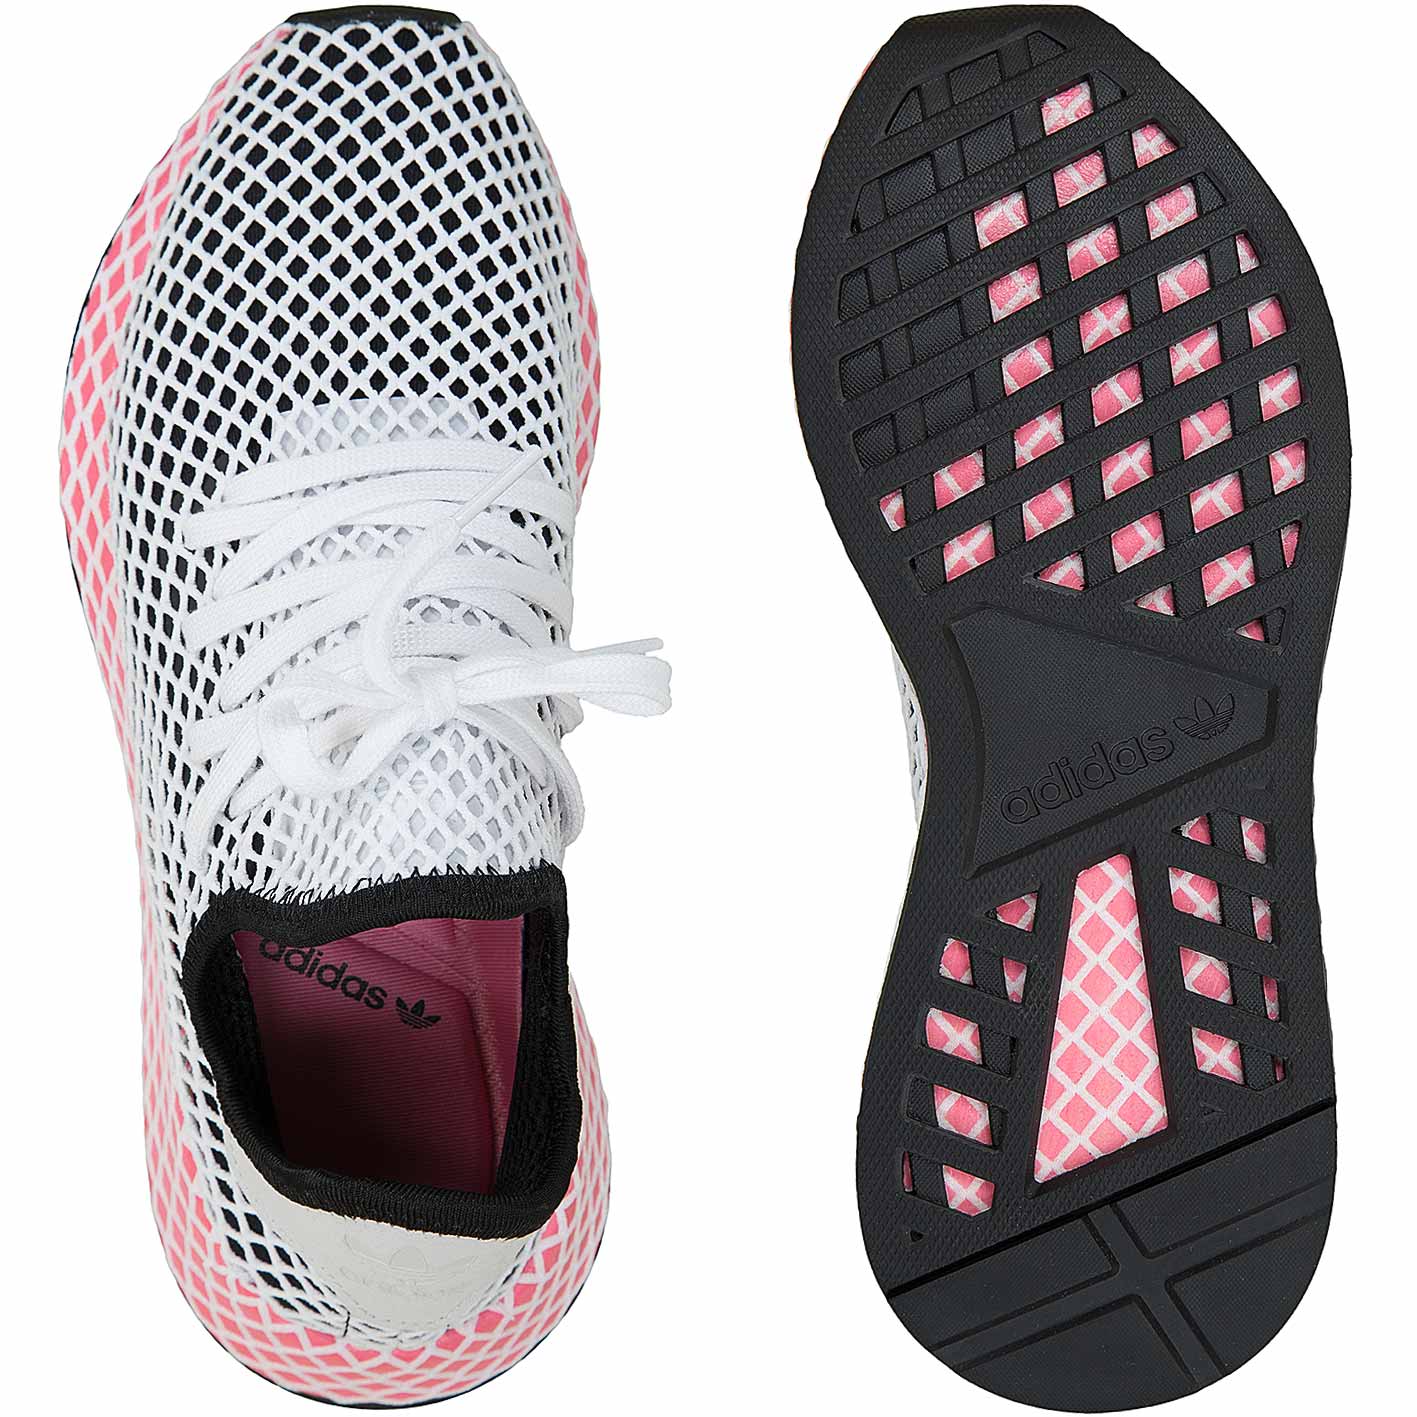 ☆ Adidas Originals Damen Sneaker Deerupt Runner schwarz/weiß/pink - hier  bestellen!